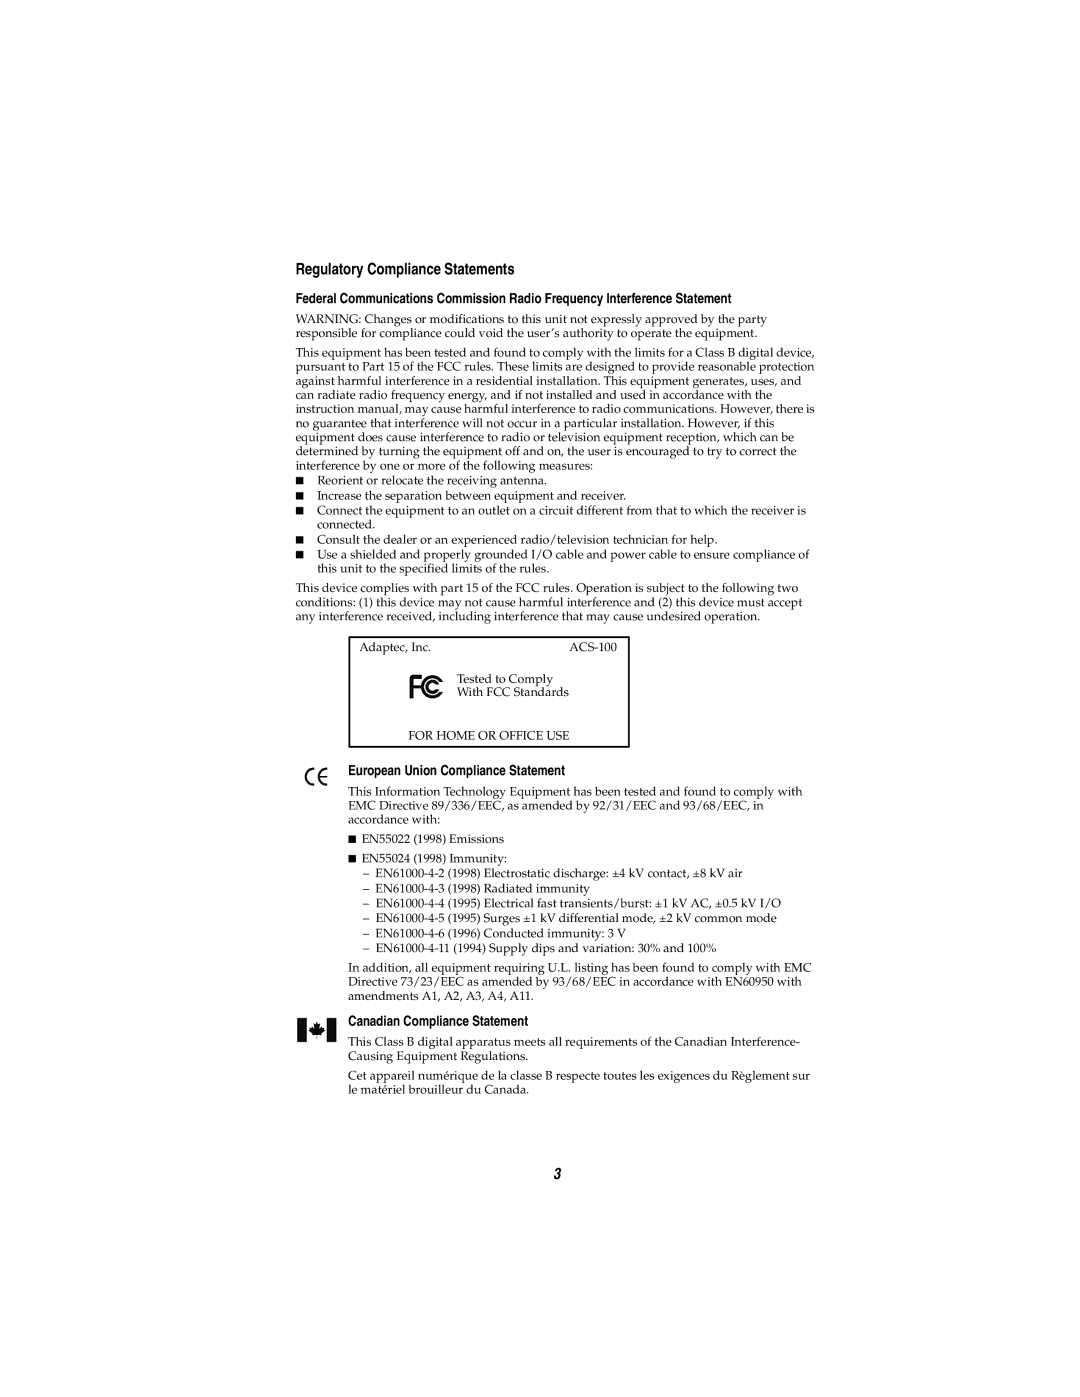 Adaptec ACS-100 manual Regulatory Compliance Statements, European Union Compliance Statement 